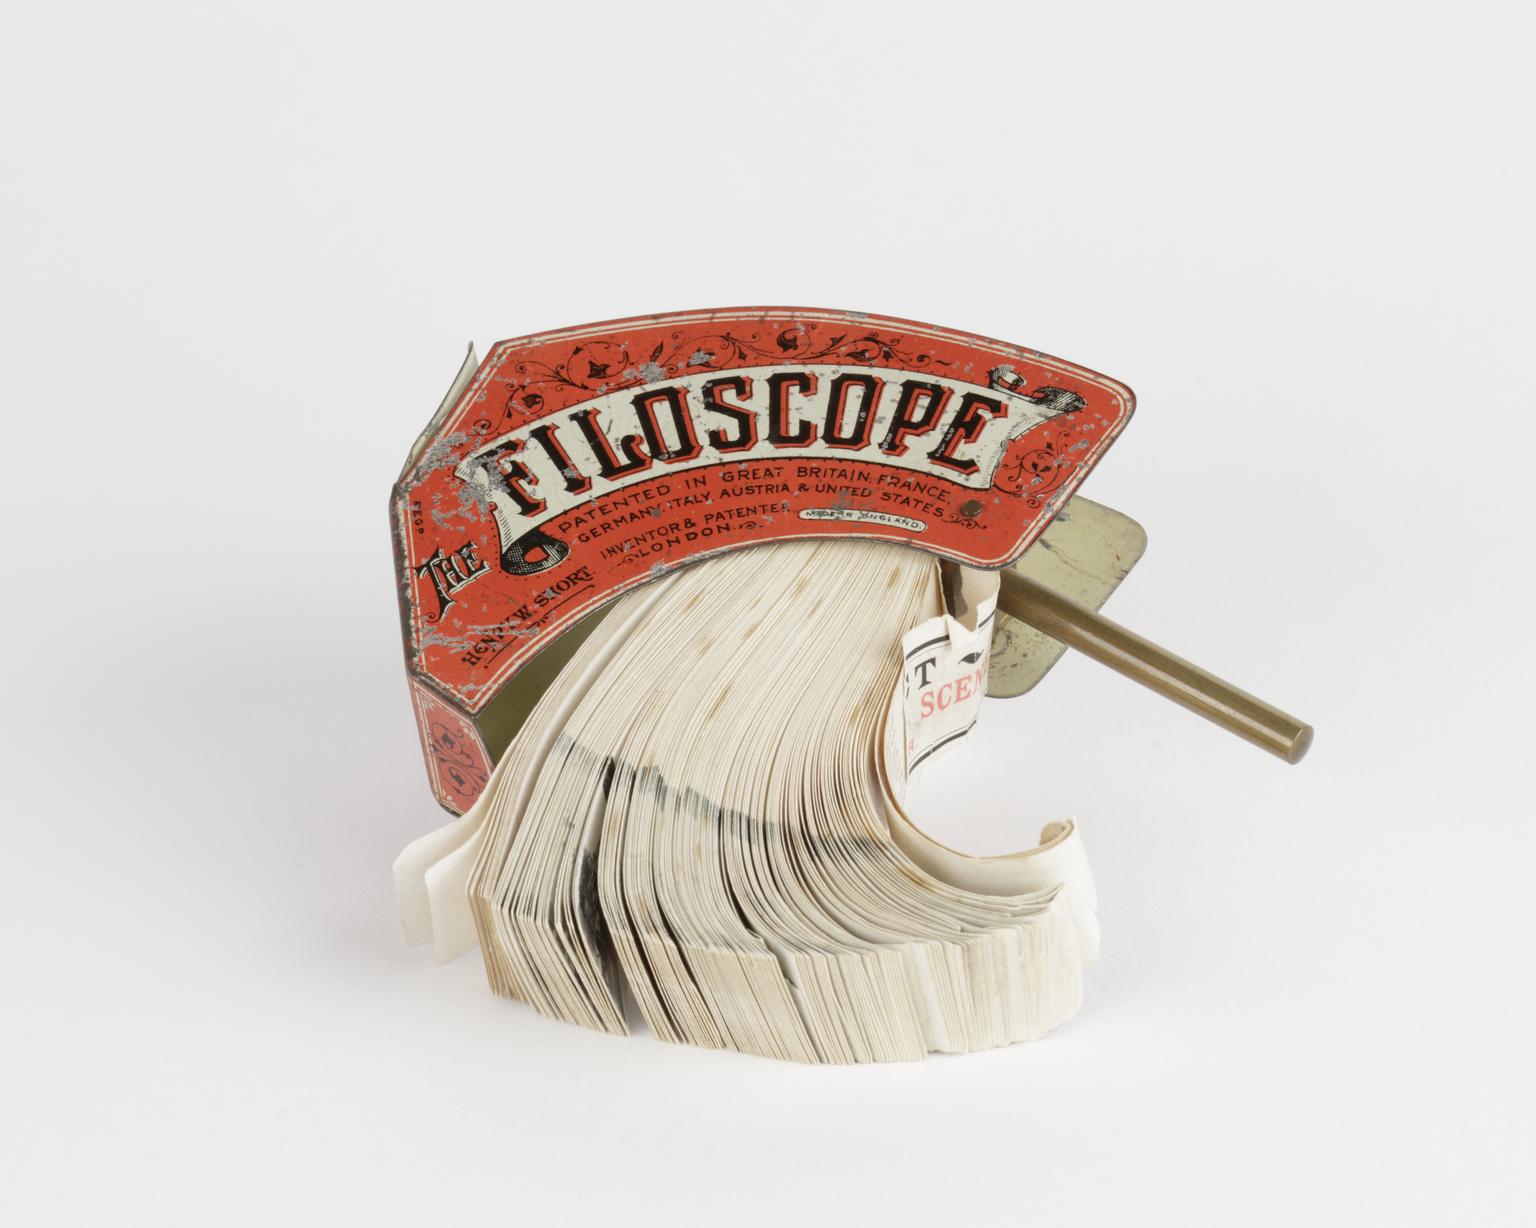 ‘Filoscope’, flip book depicting a street scene in Westminster